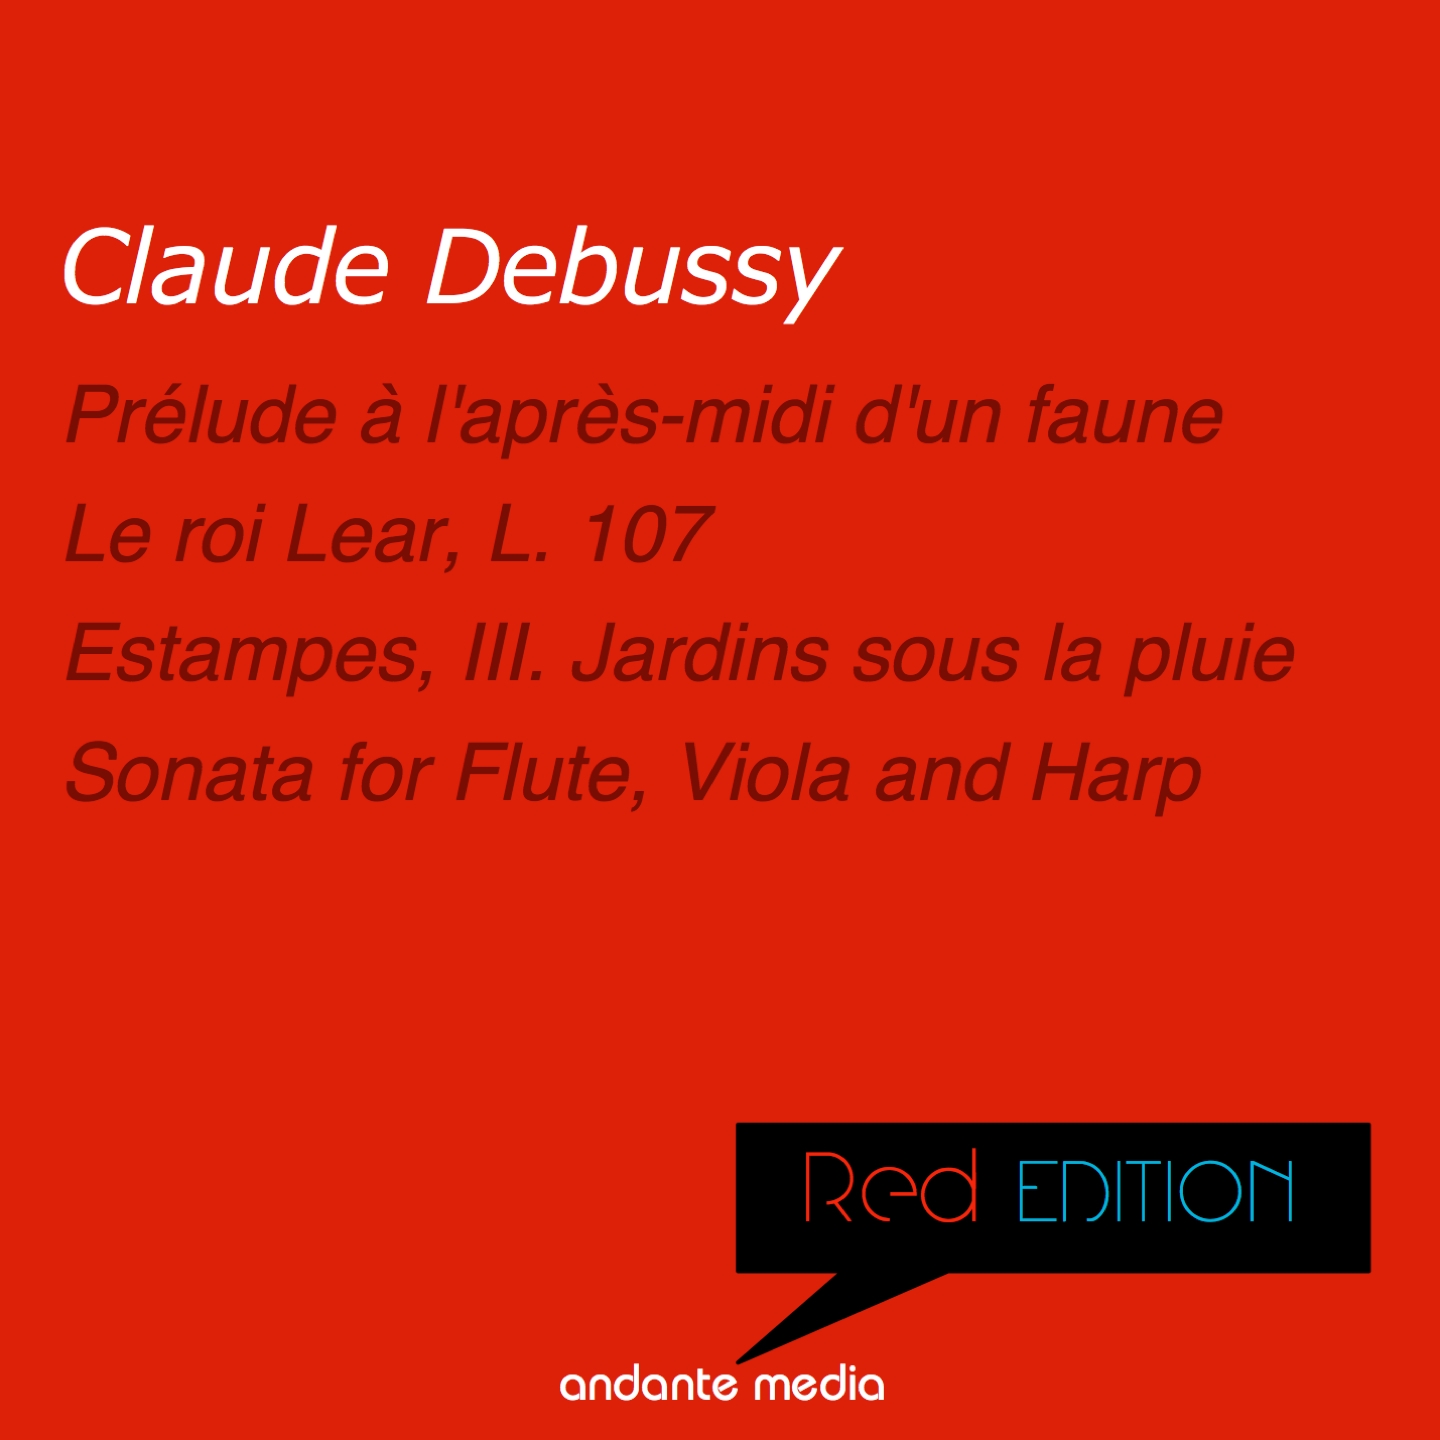 Red Edition - Debussy: Le roi Lear, L. 107 & Sonata for Flute, Viola and Harp